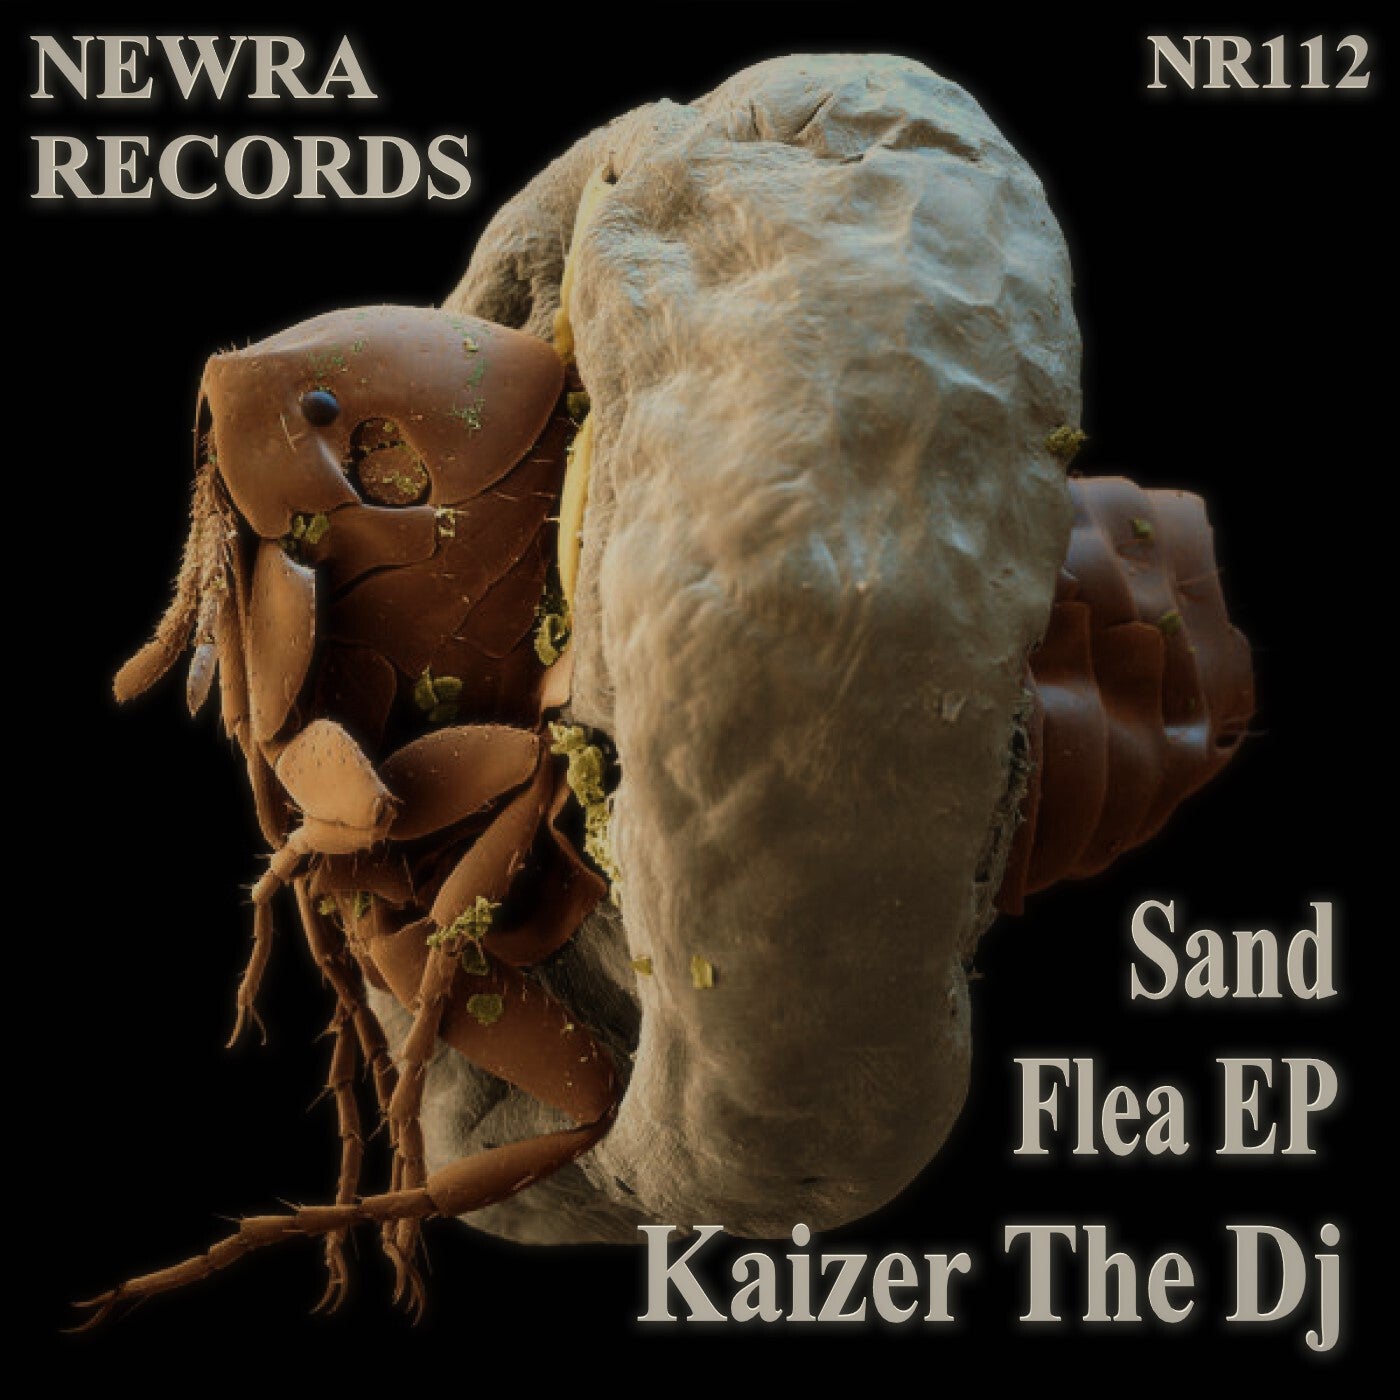 Sand Flea EP